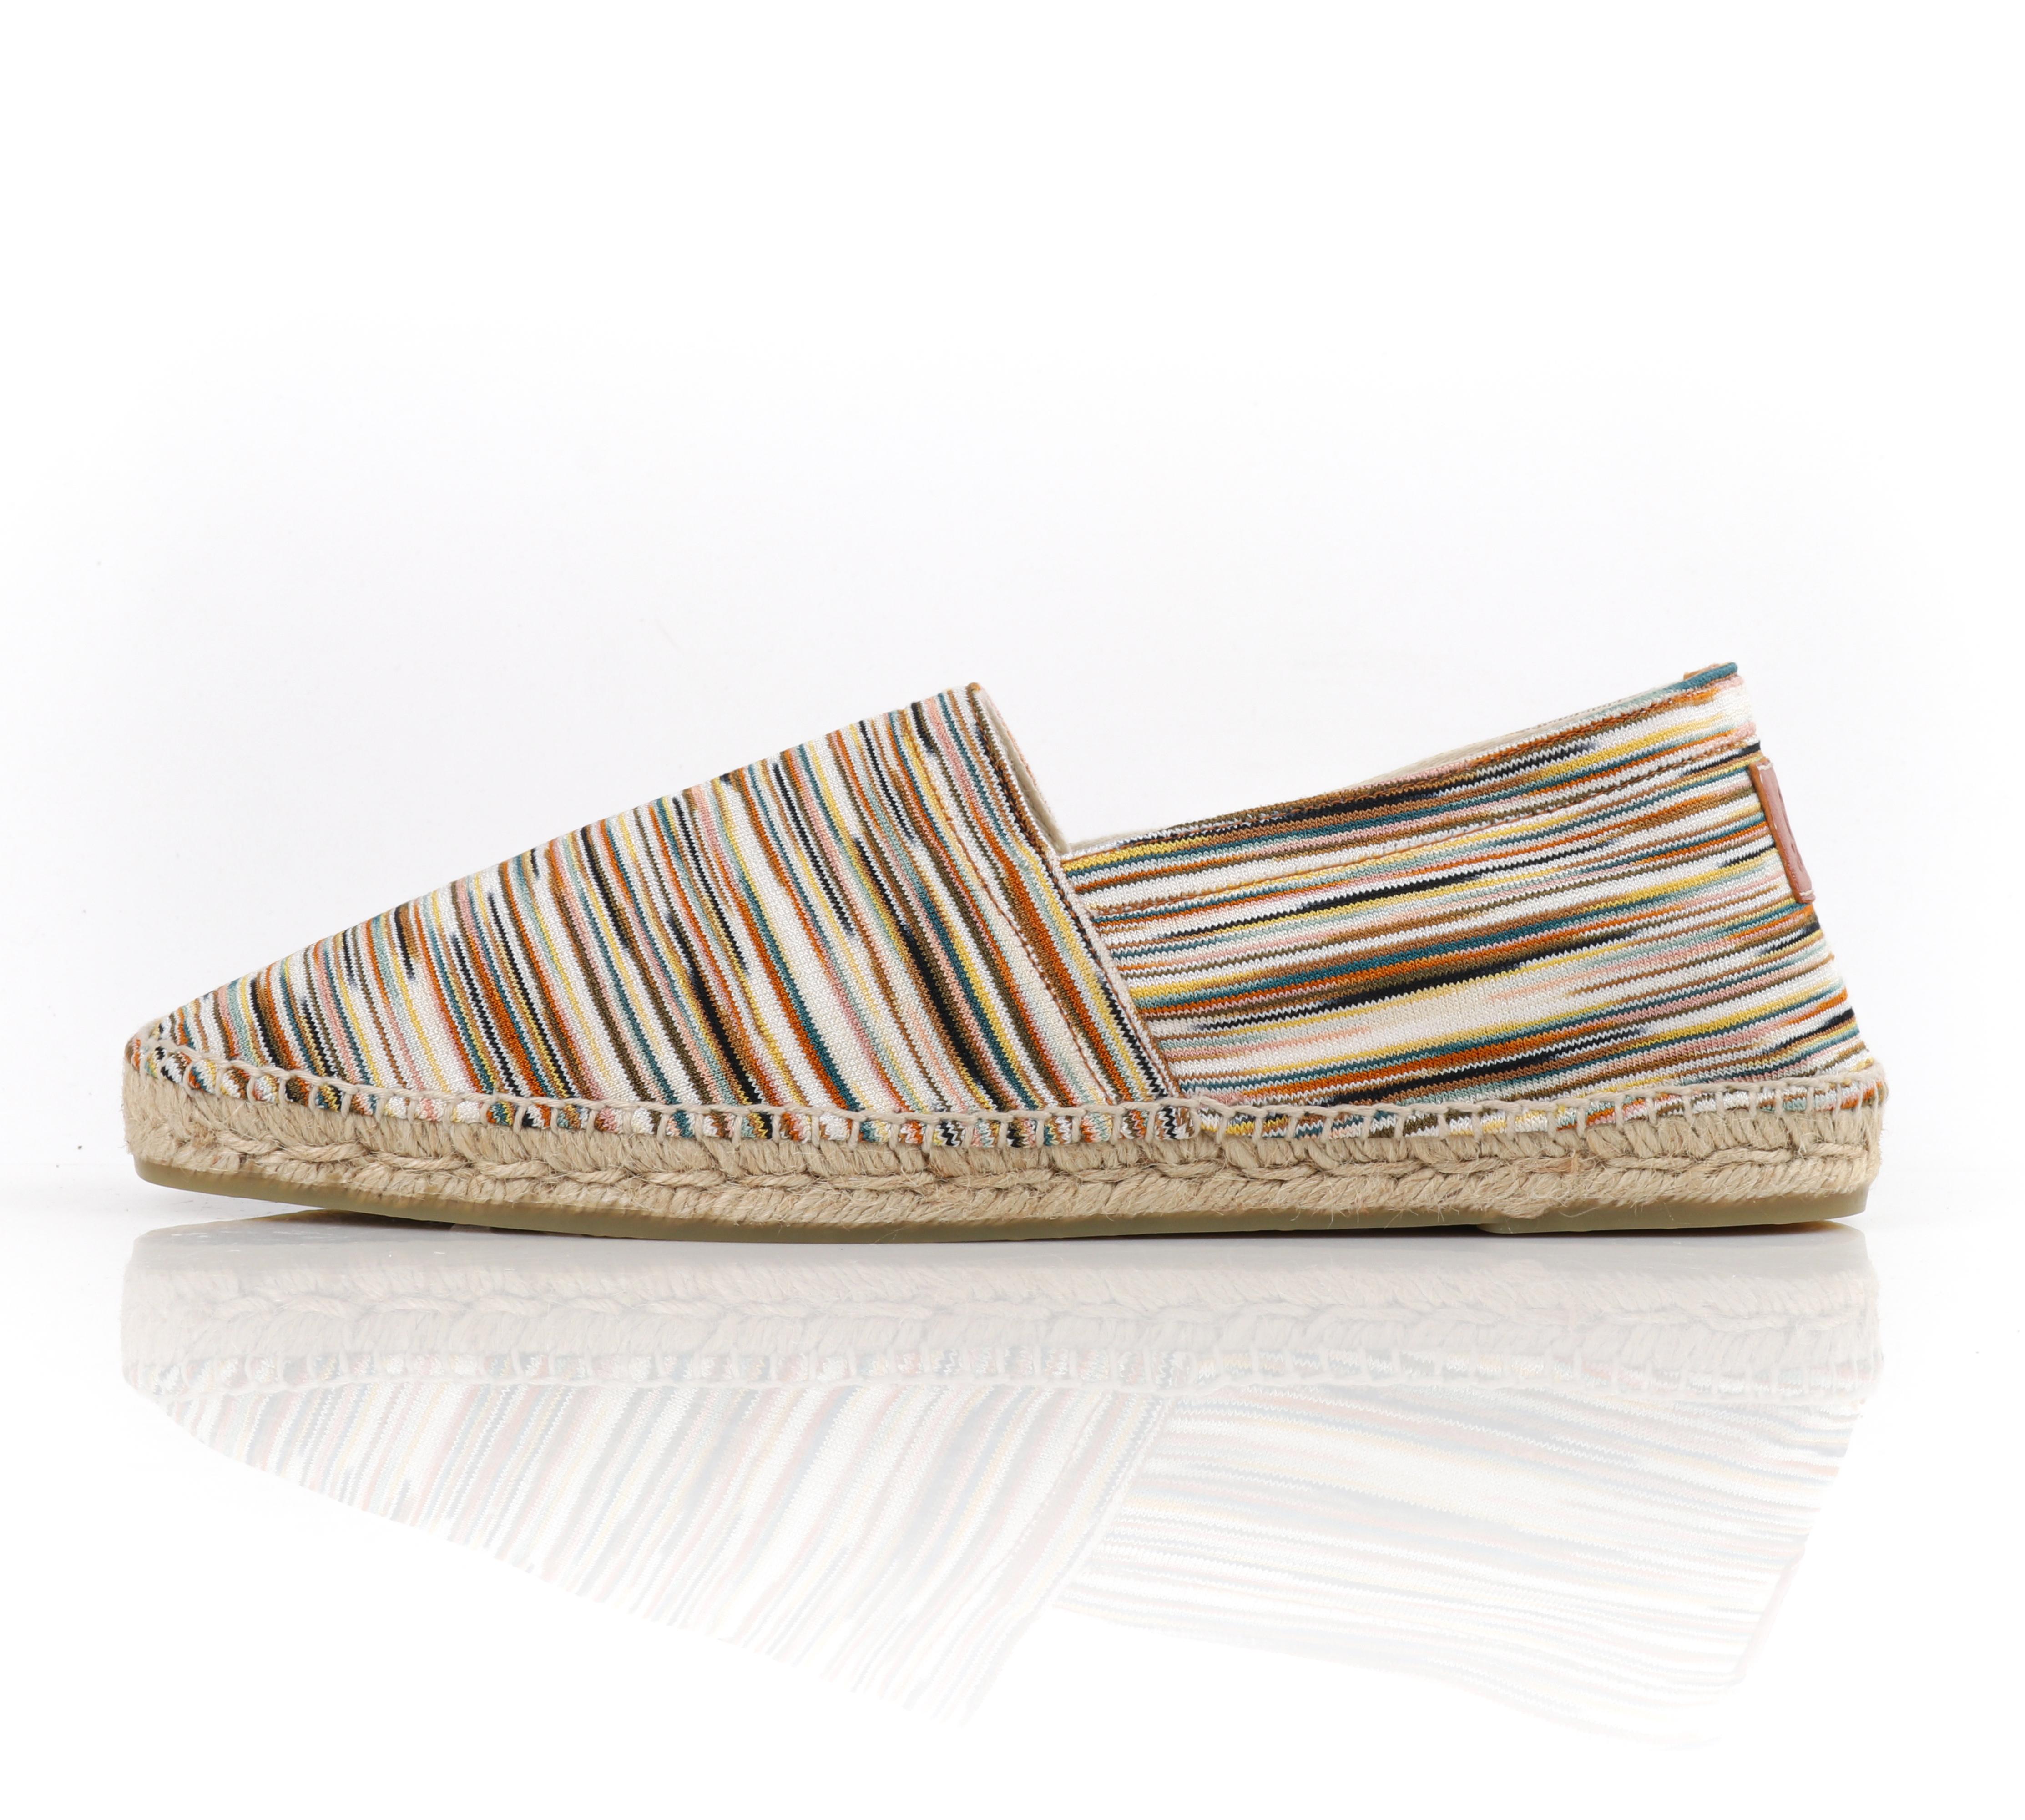 MISSONI Castañer S/S 2019 Multicolor Stripe Jute Rope Kenda Espadrilles Shoes  In Good Condition In Thiensville, WI